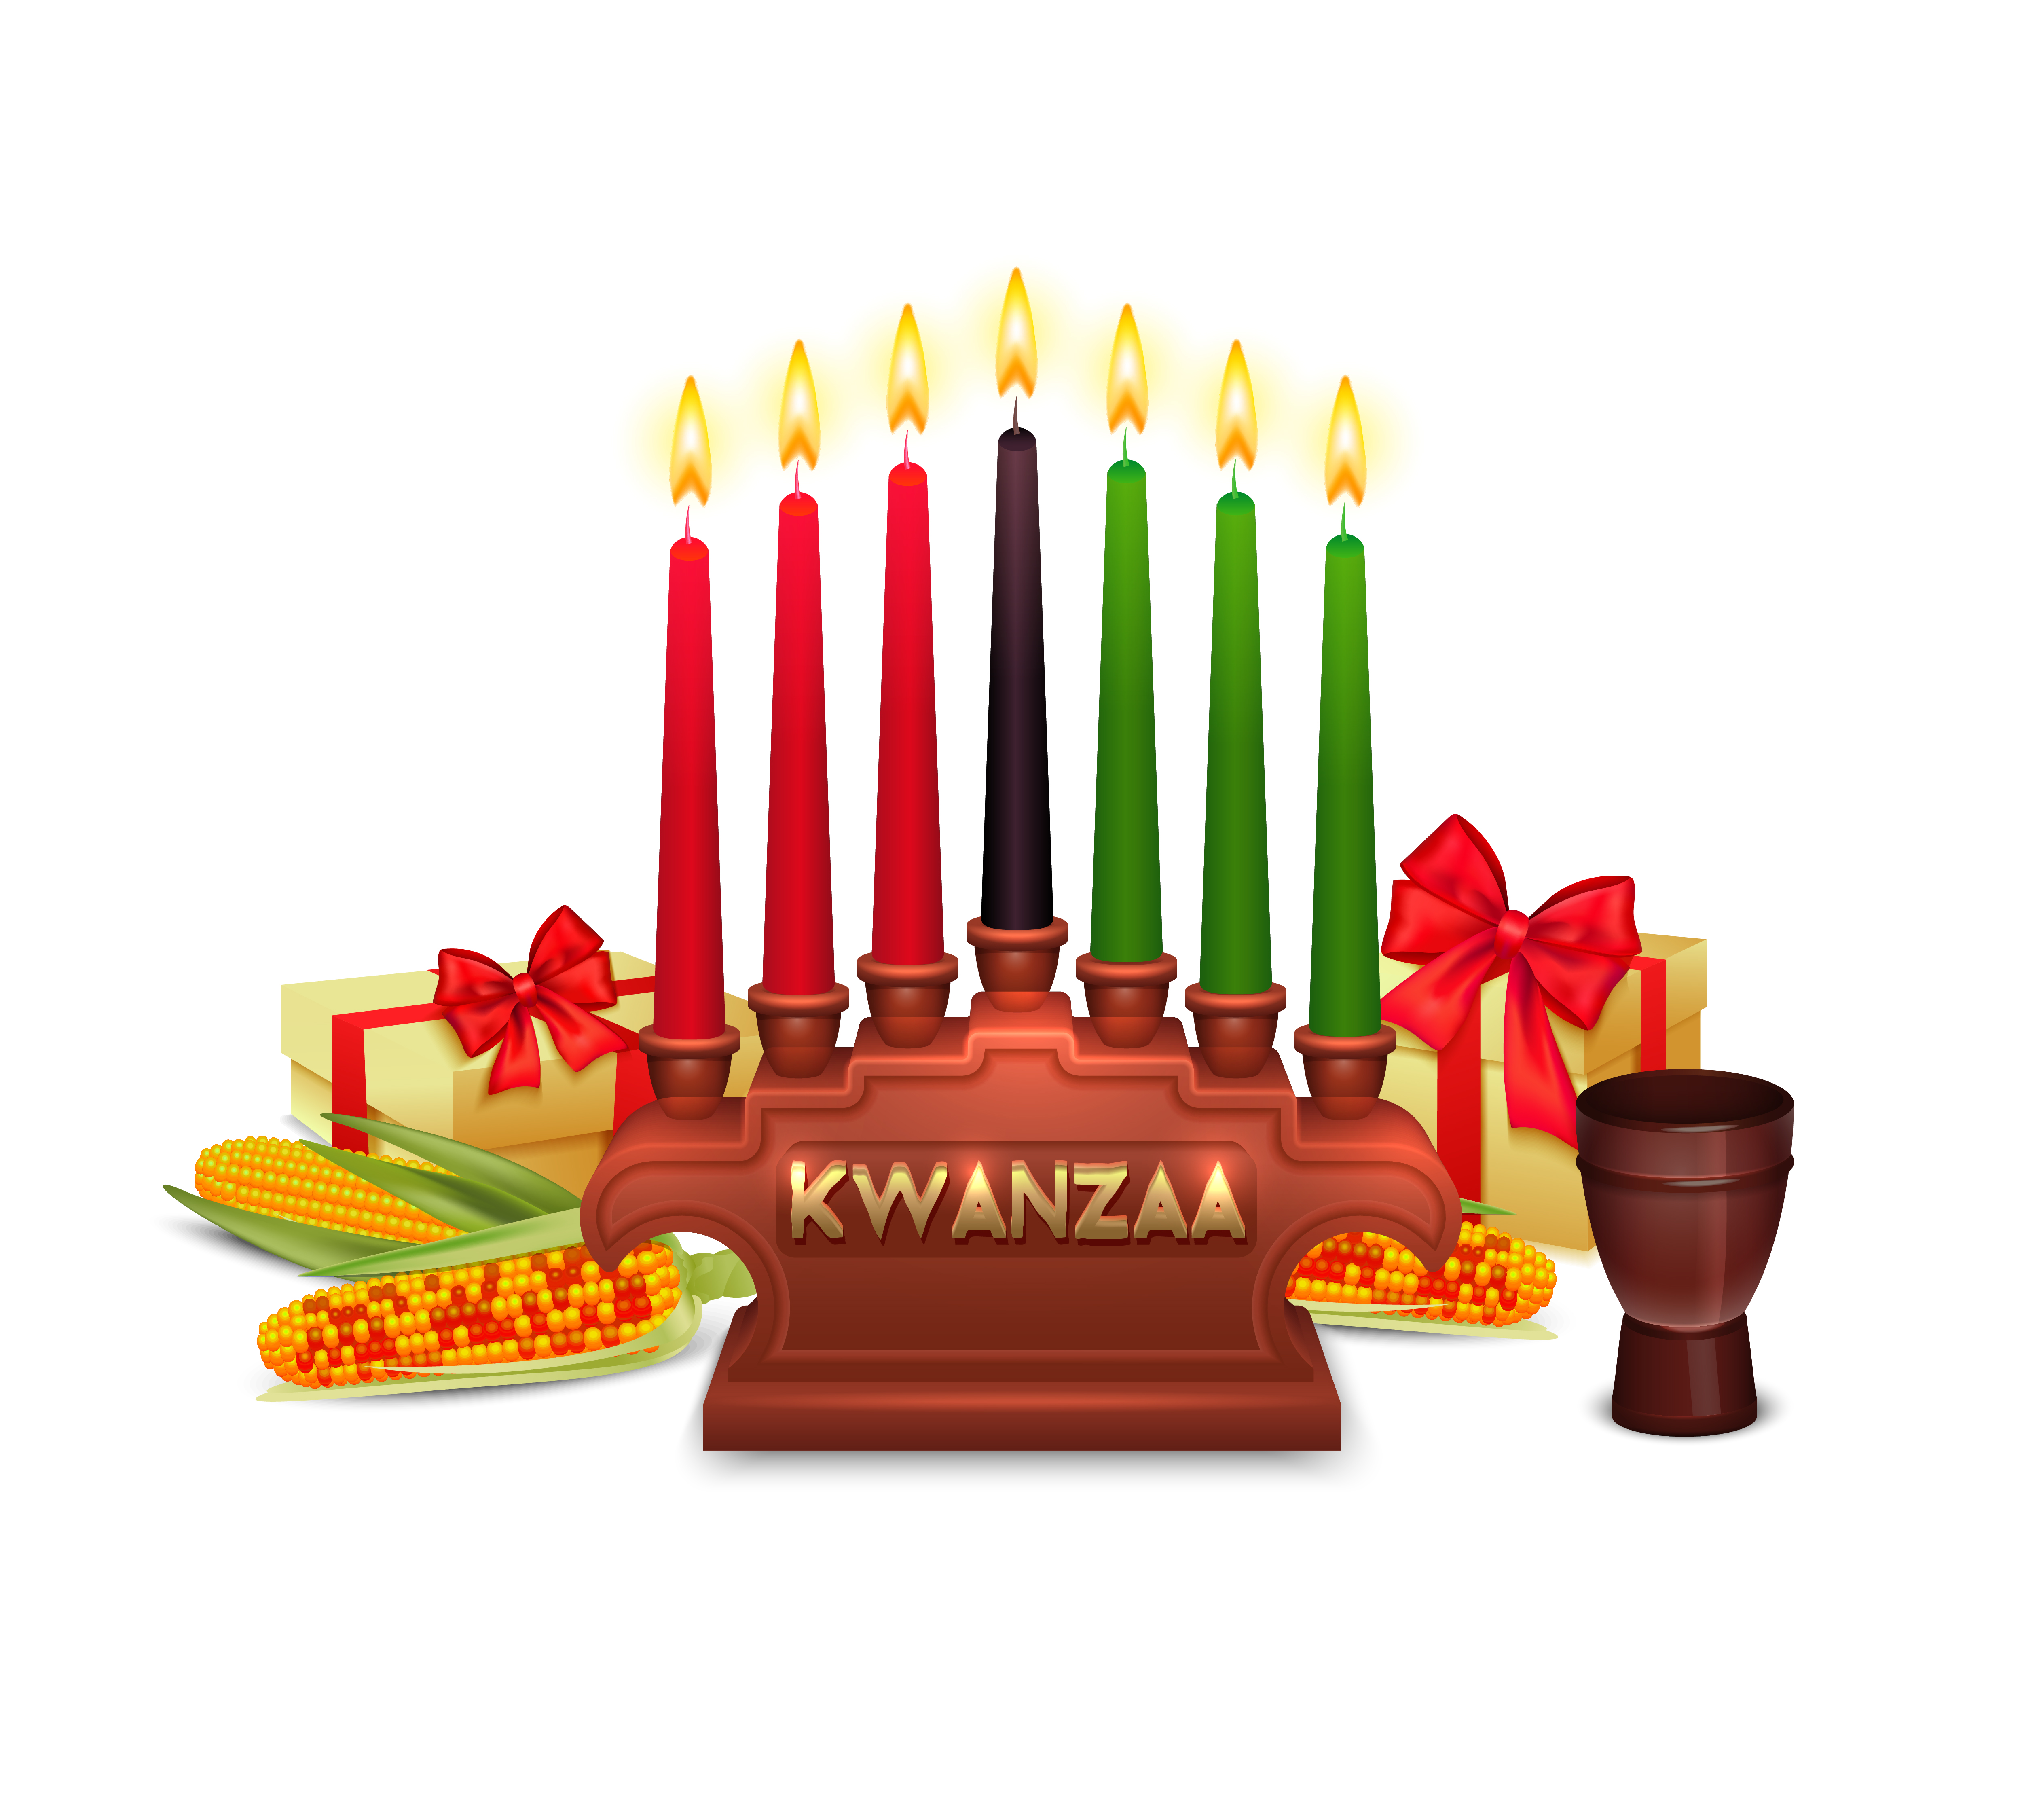 kwanzaa-holiday-celebration-symbols-composition-poster-471688-vector-art-at-vecteezy